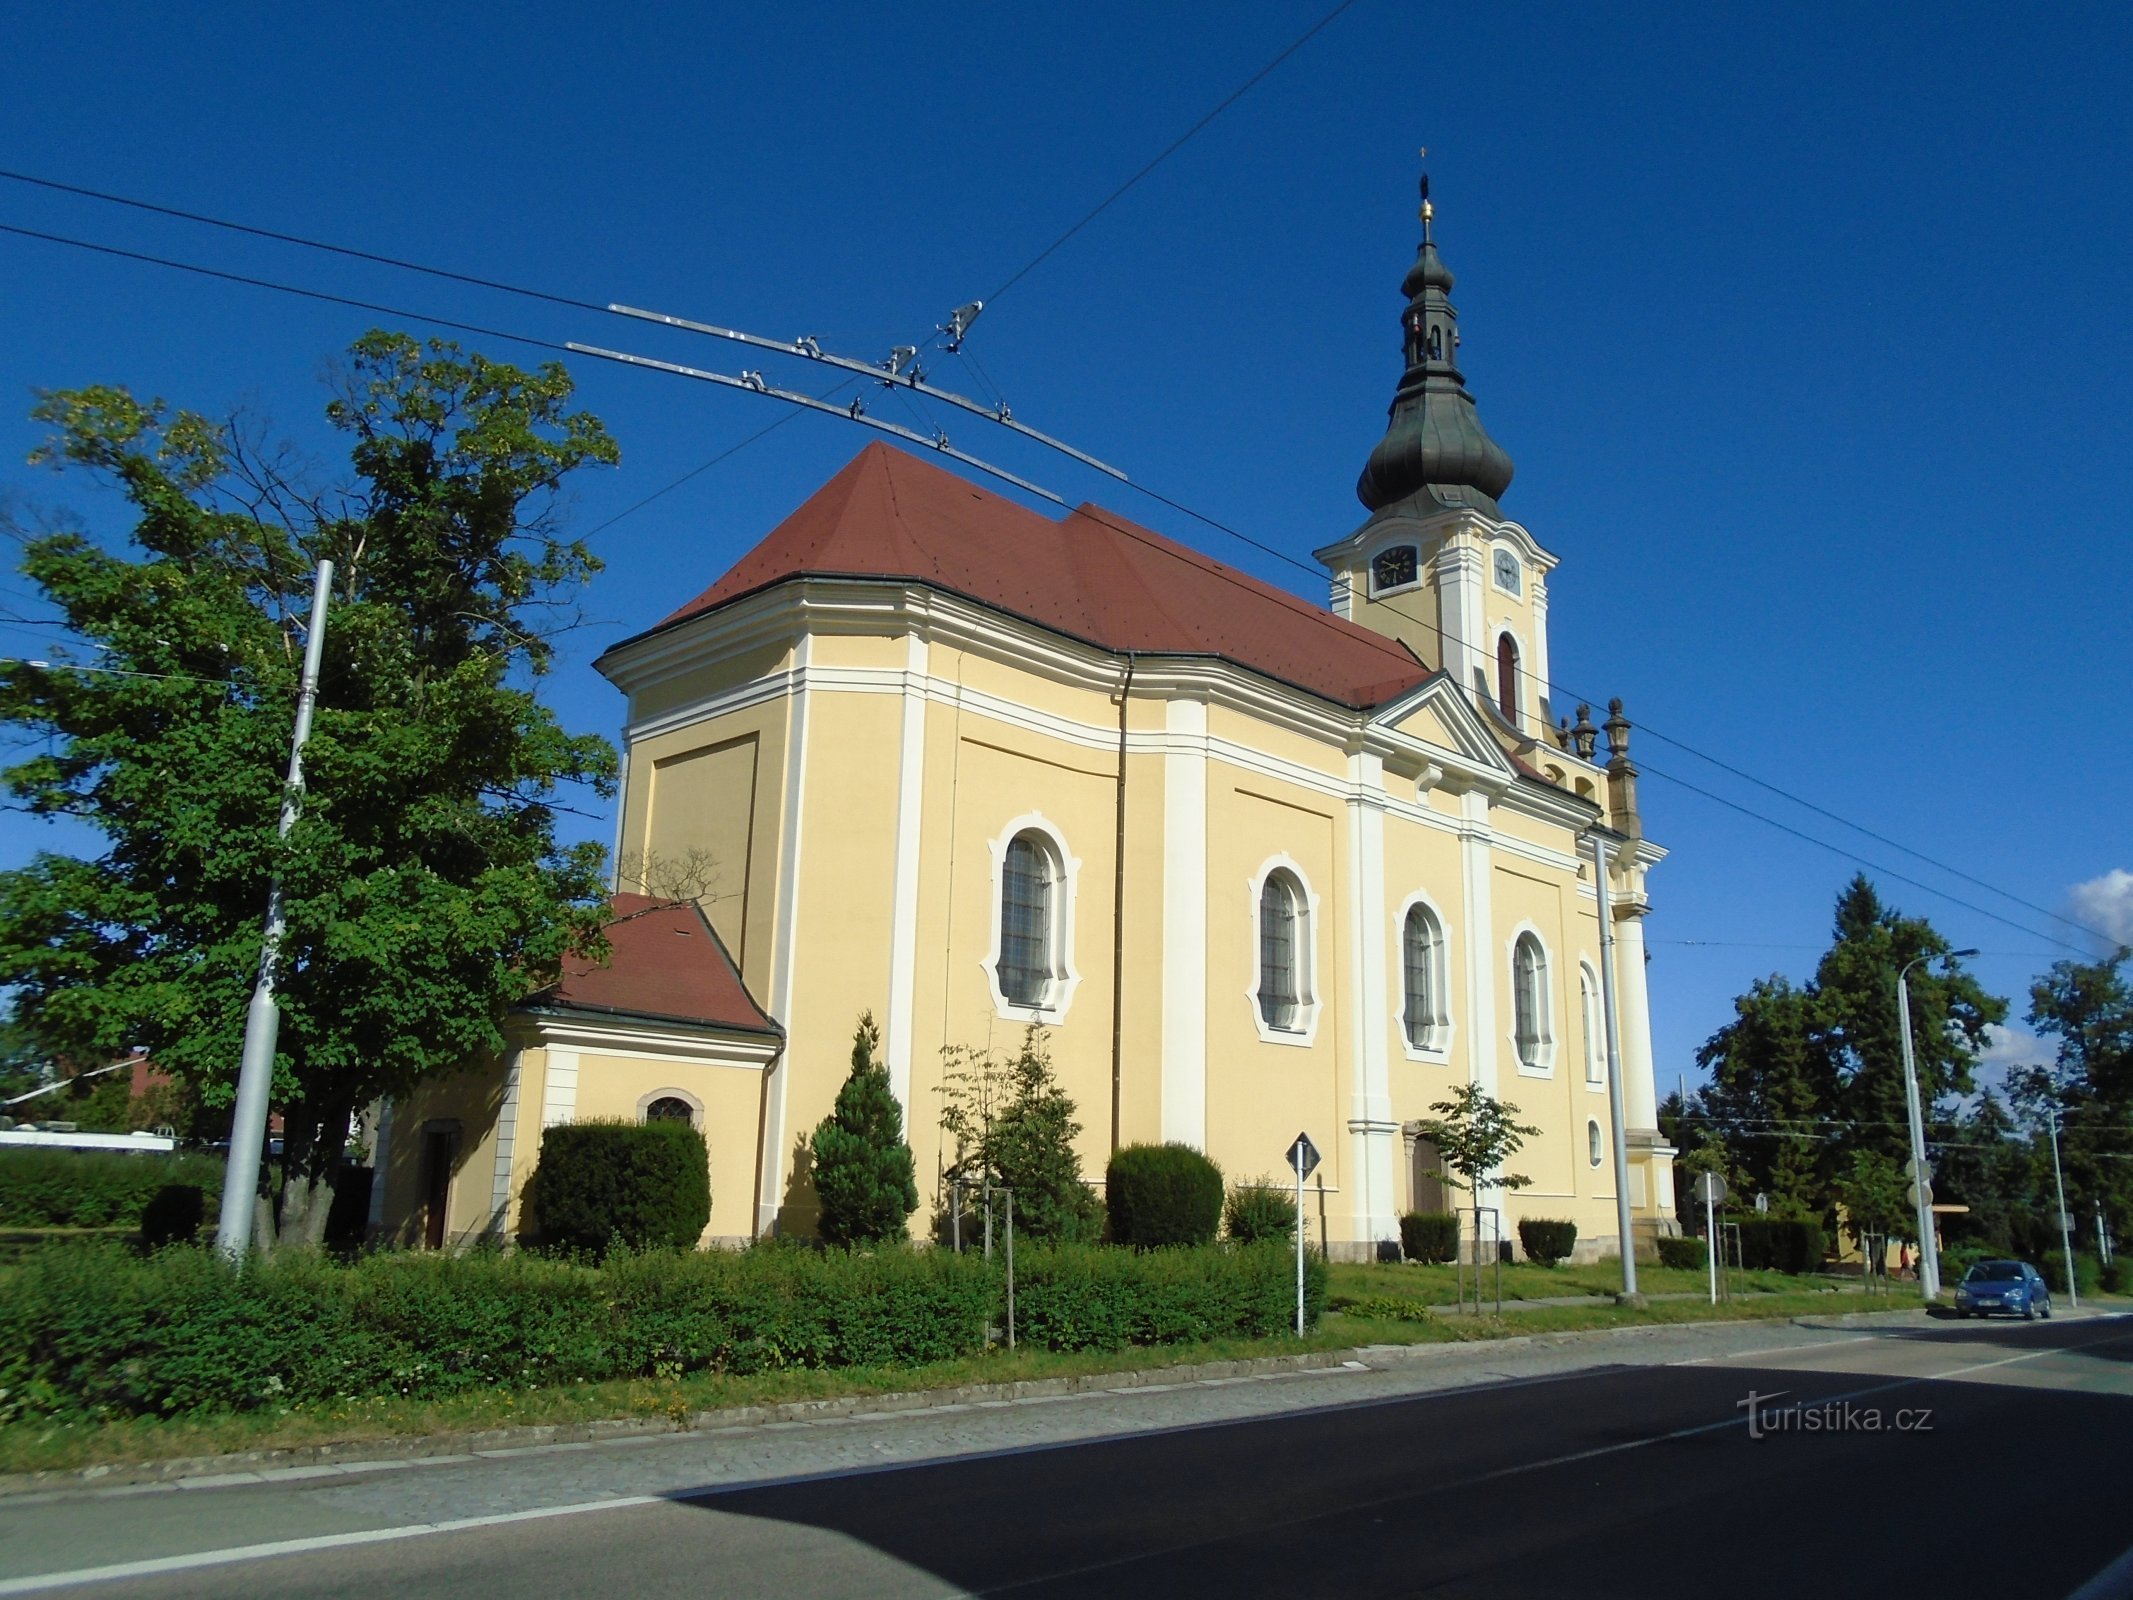 Nhà thờ St. Antonína, Hradec Králové, ngày 1.7.2018 tháng XNUMX năm XNUMX)